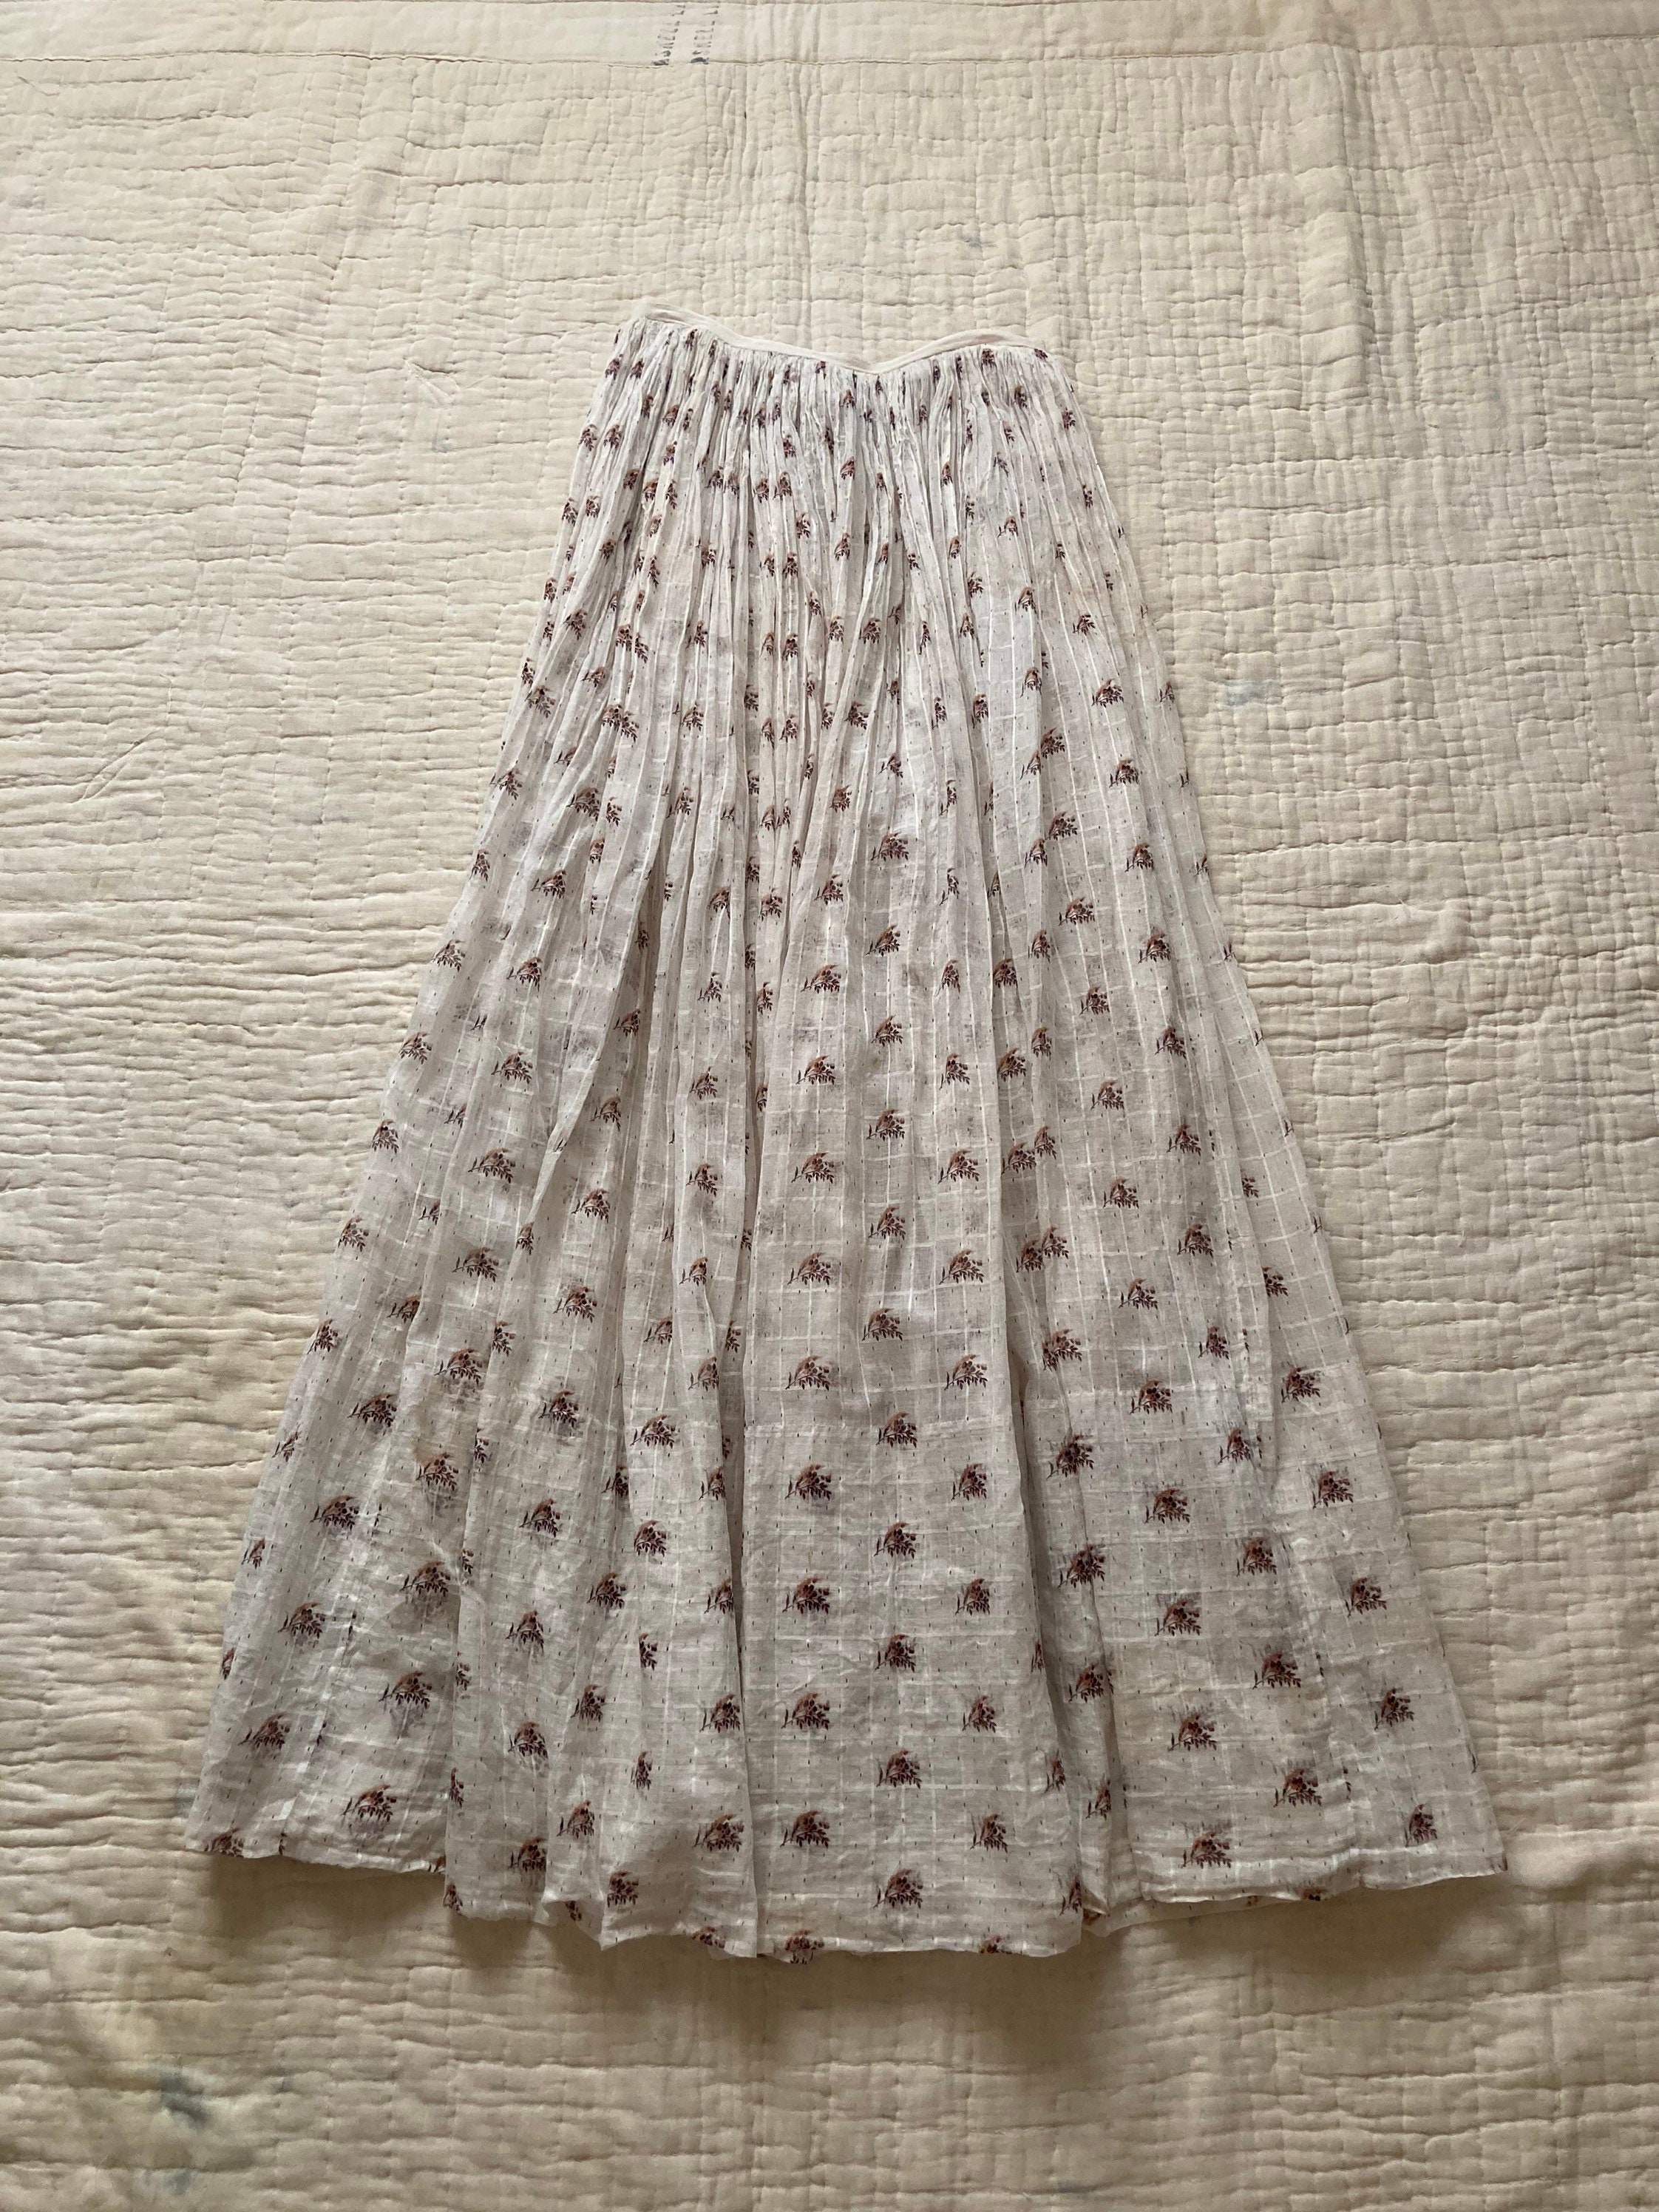 Authentic 1800s Cotton Calico Prairie Dress | Etsy